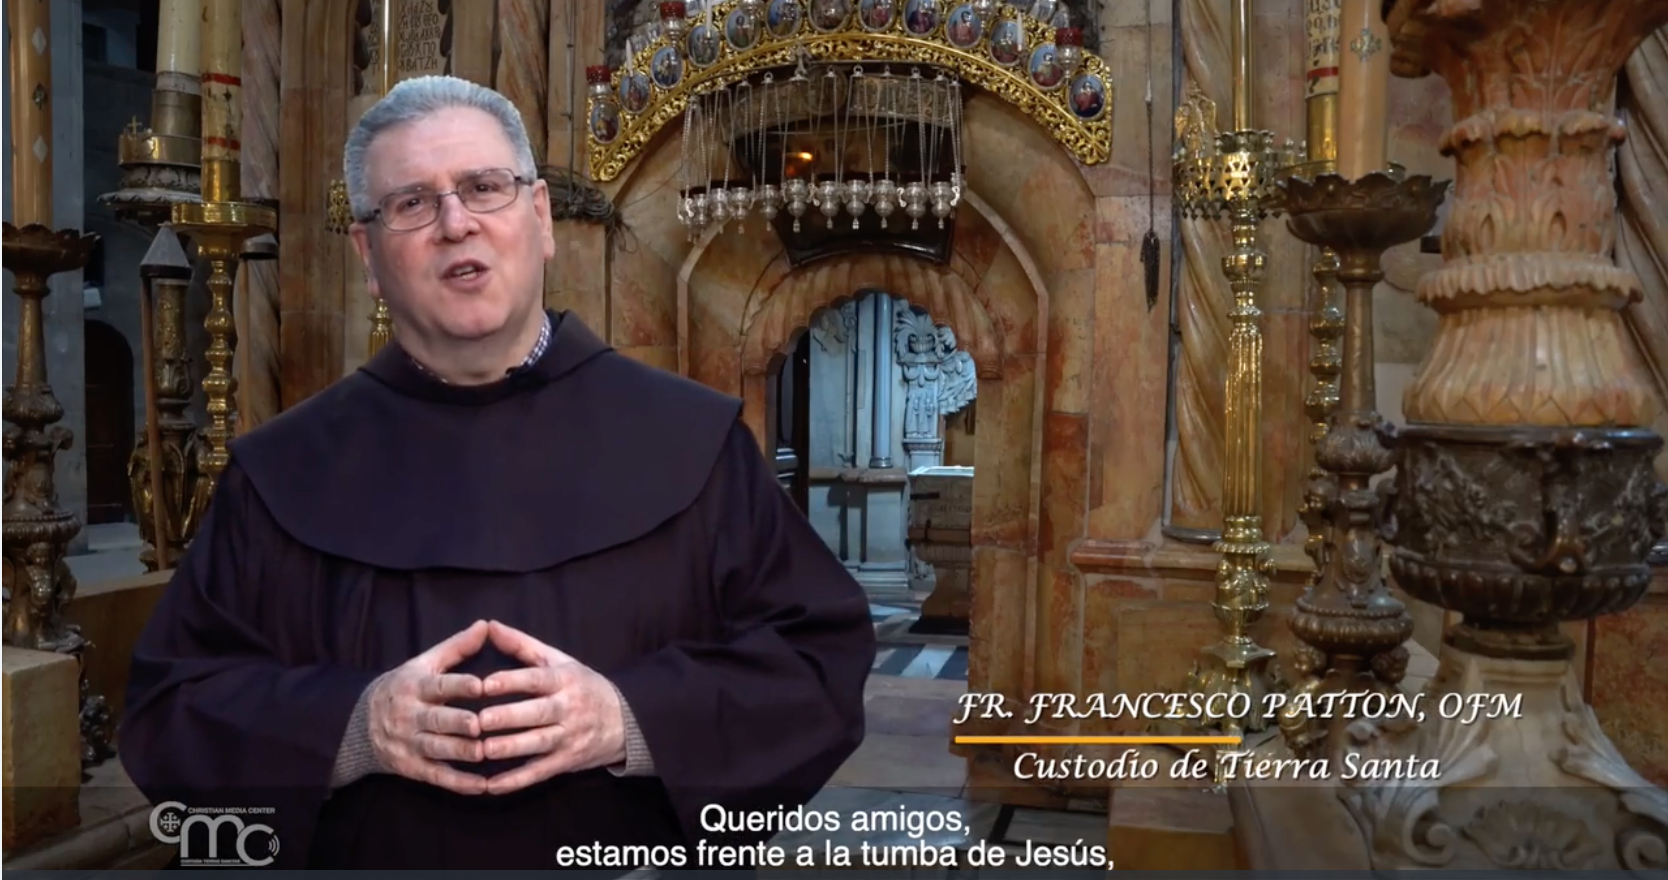 Fr. Francesco Patton OFM
Custodio de Tierra Santa.